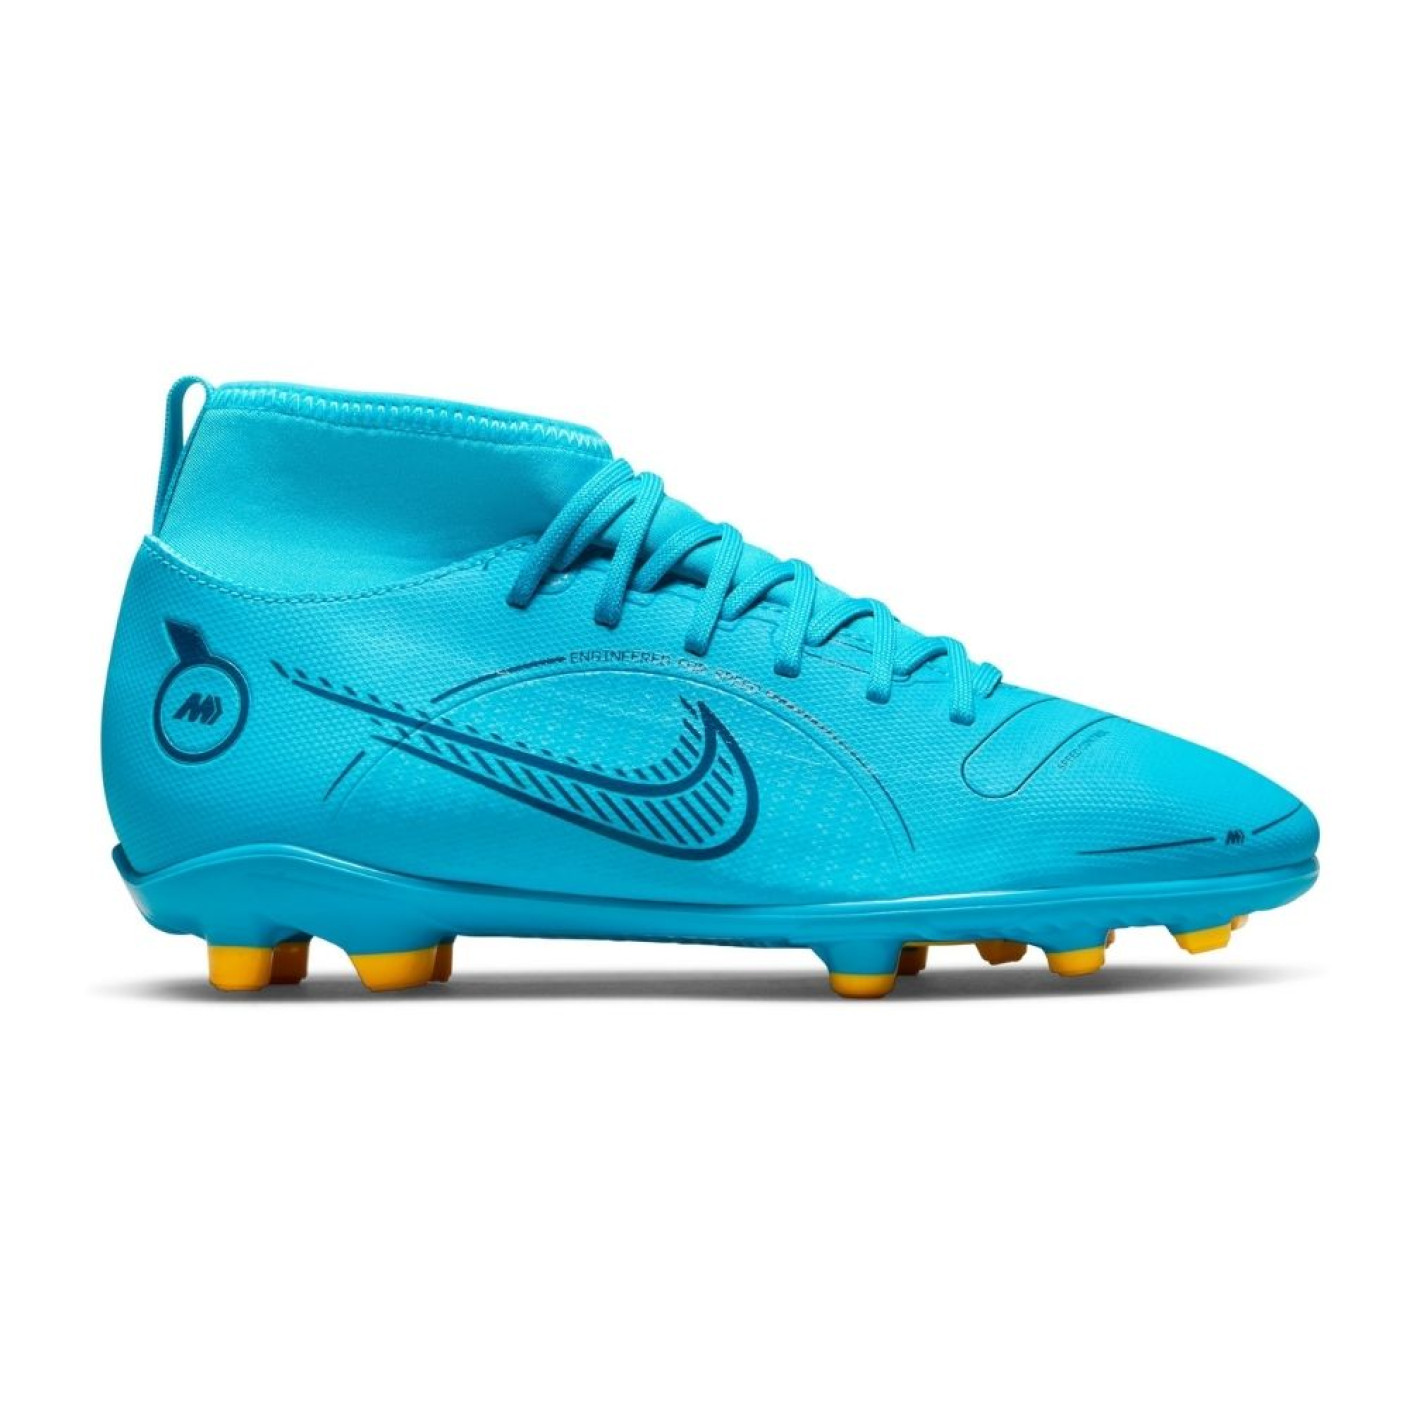 Nike Mercurial Superfly 8 Club Gazon Naturel Gazon Artificiel Chaussures de Foot (MG) Enfants Bleu Orange